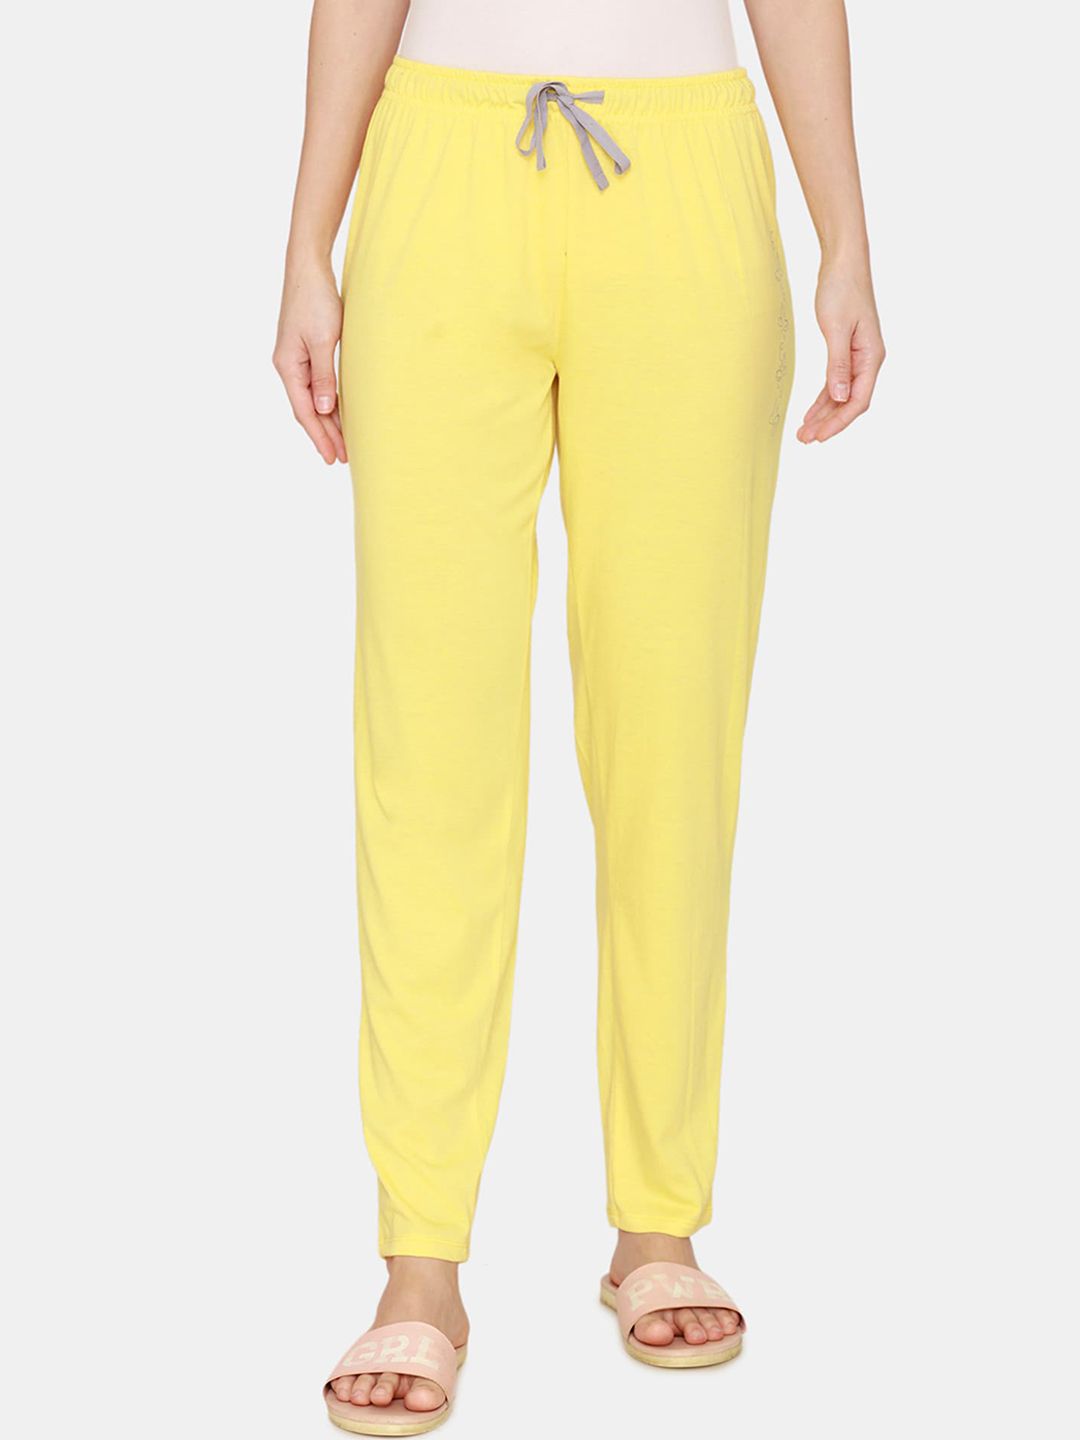 Rosaline by Zivame Women Yellow Solid Cotton Pyjama Price in India